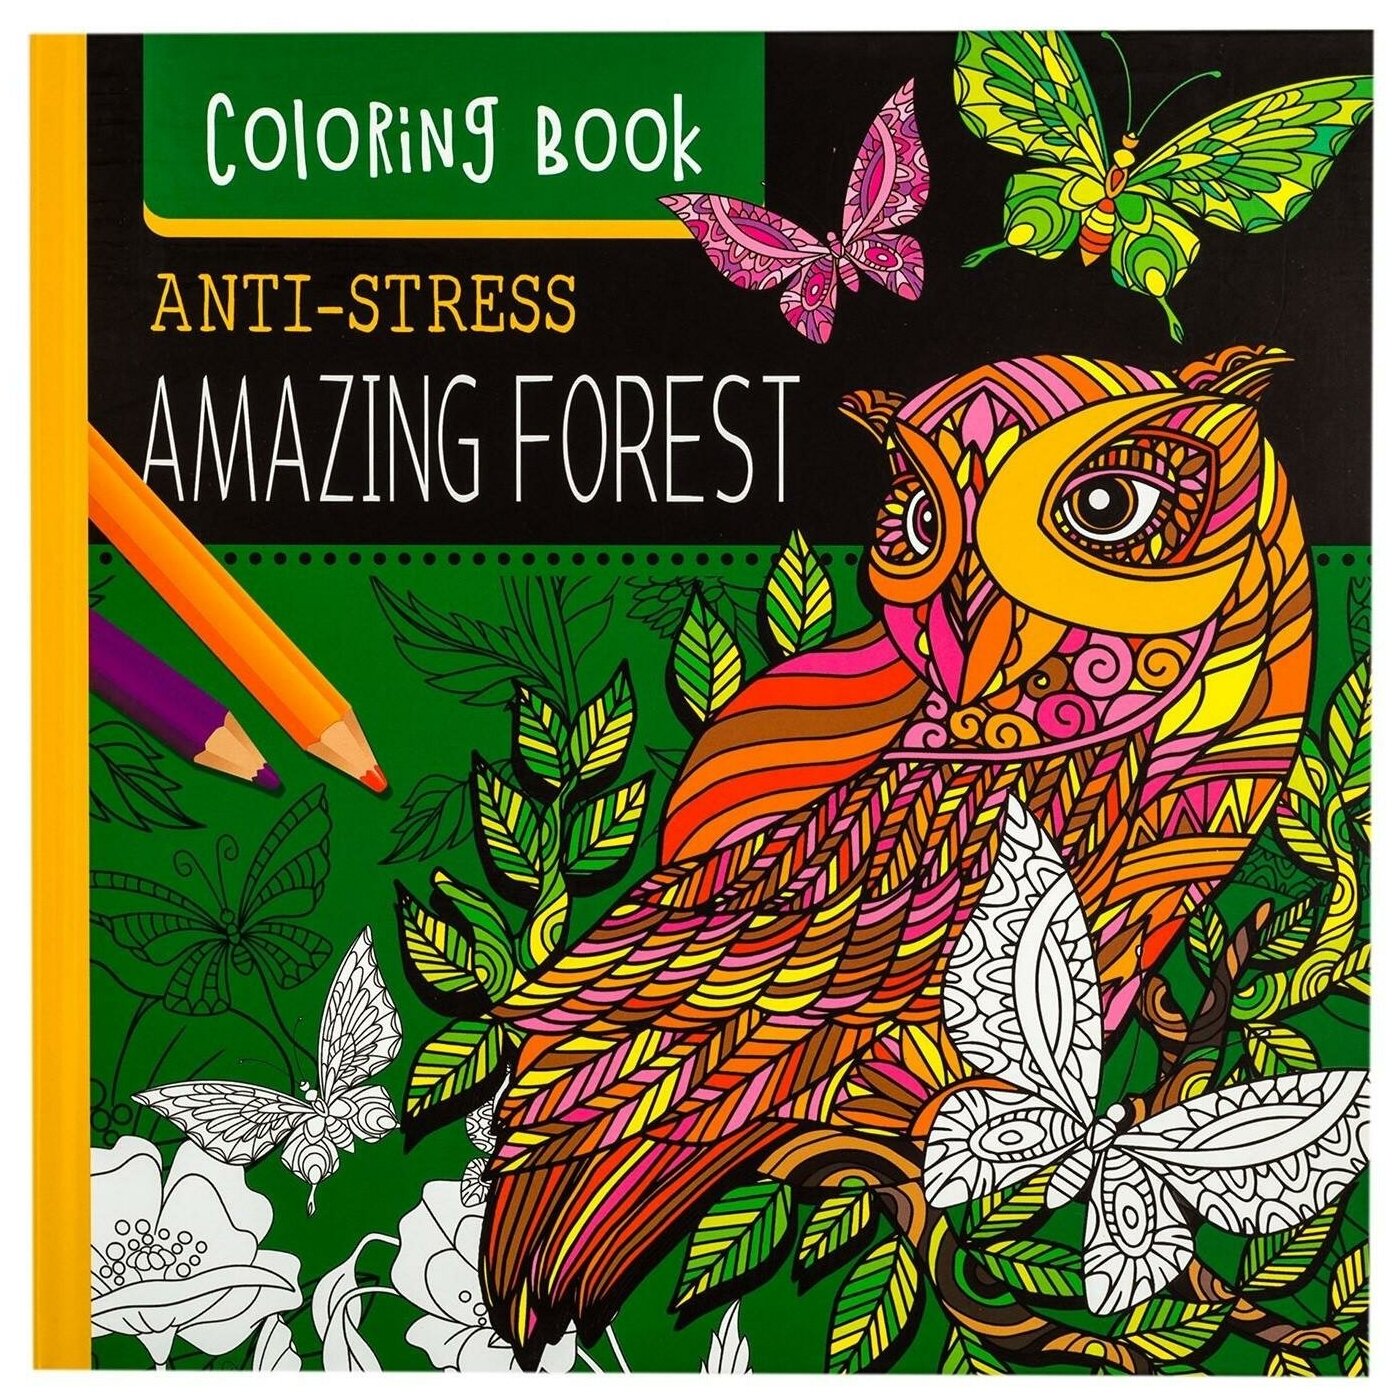 Glorious anti-stress coloring book